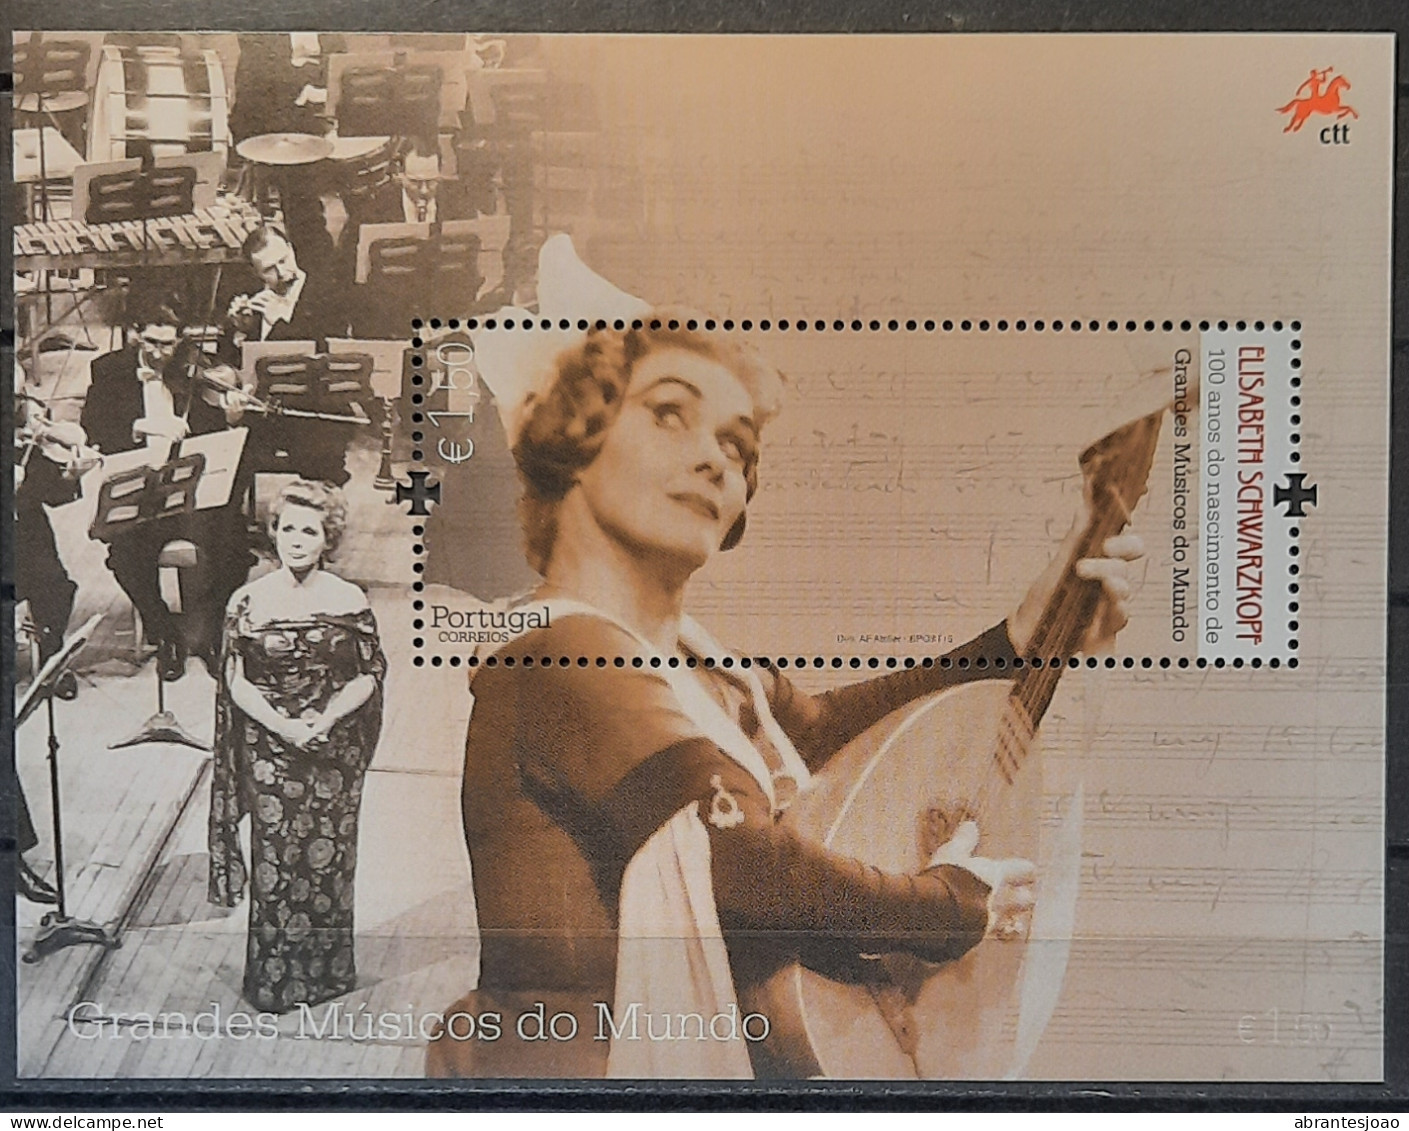 2015 - Portugal - MNH - Great Musicians Of The World - Elizabeth Schwarzkopf - 1 Stamp + Souvenir Sheet Of 1 Stamp - Nuovi